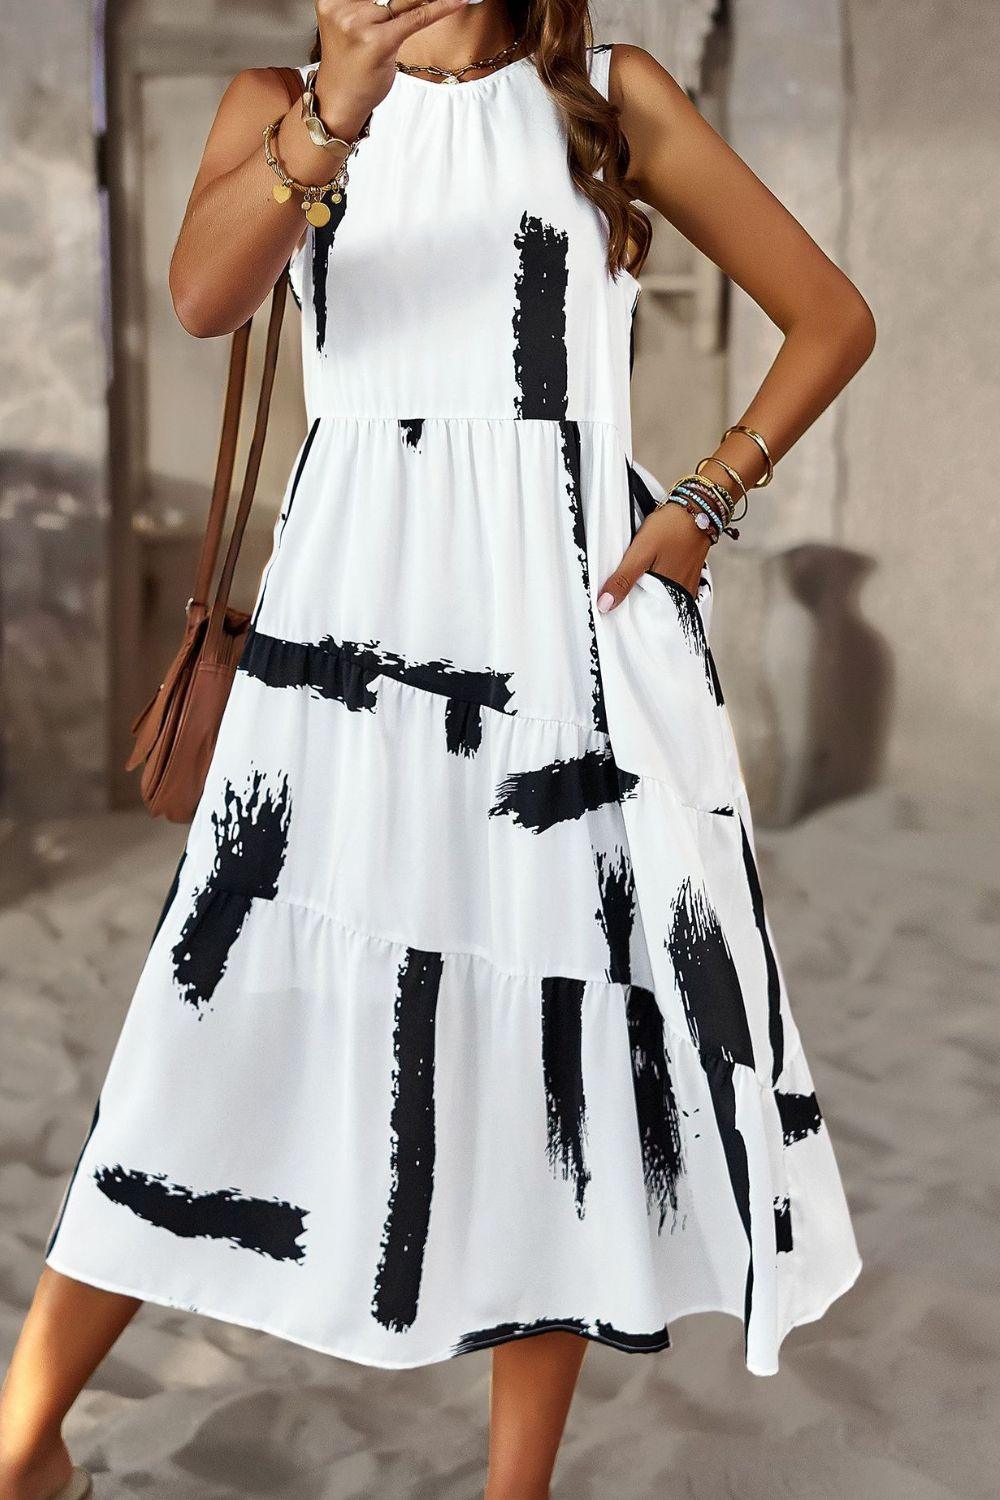 Printed Sleeveless Midi Dress with Pocket - Crazy Like a Daisy Boutique #